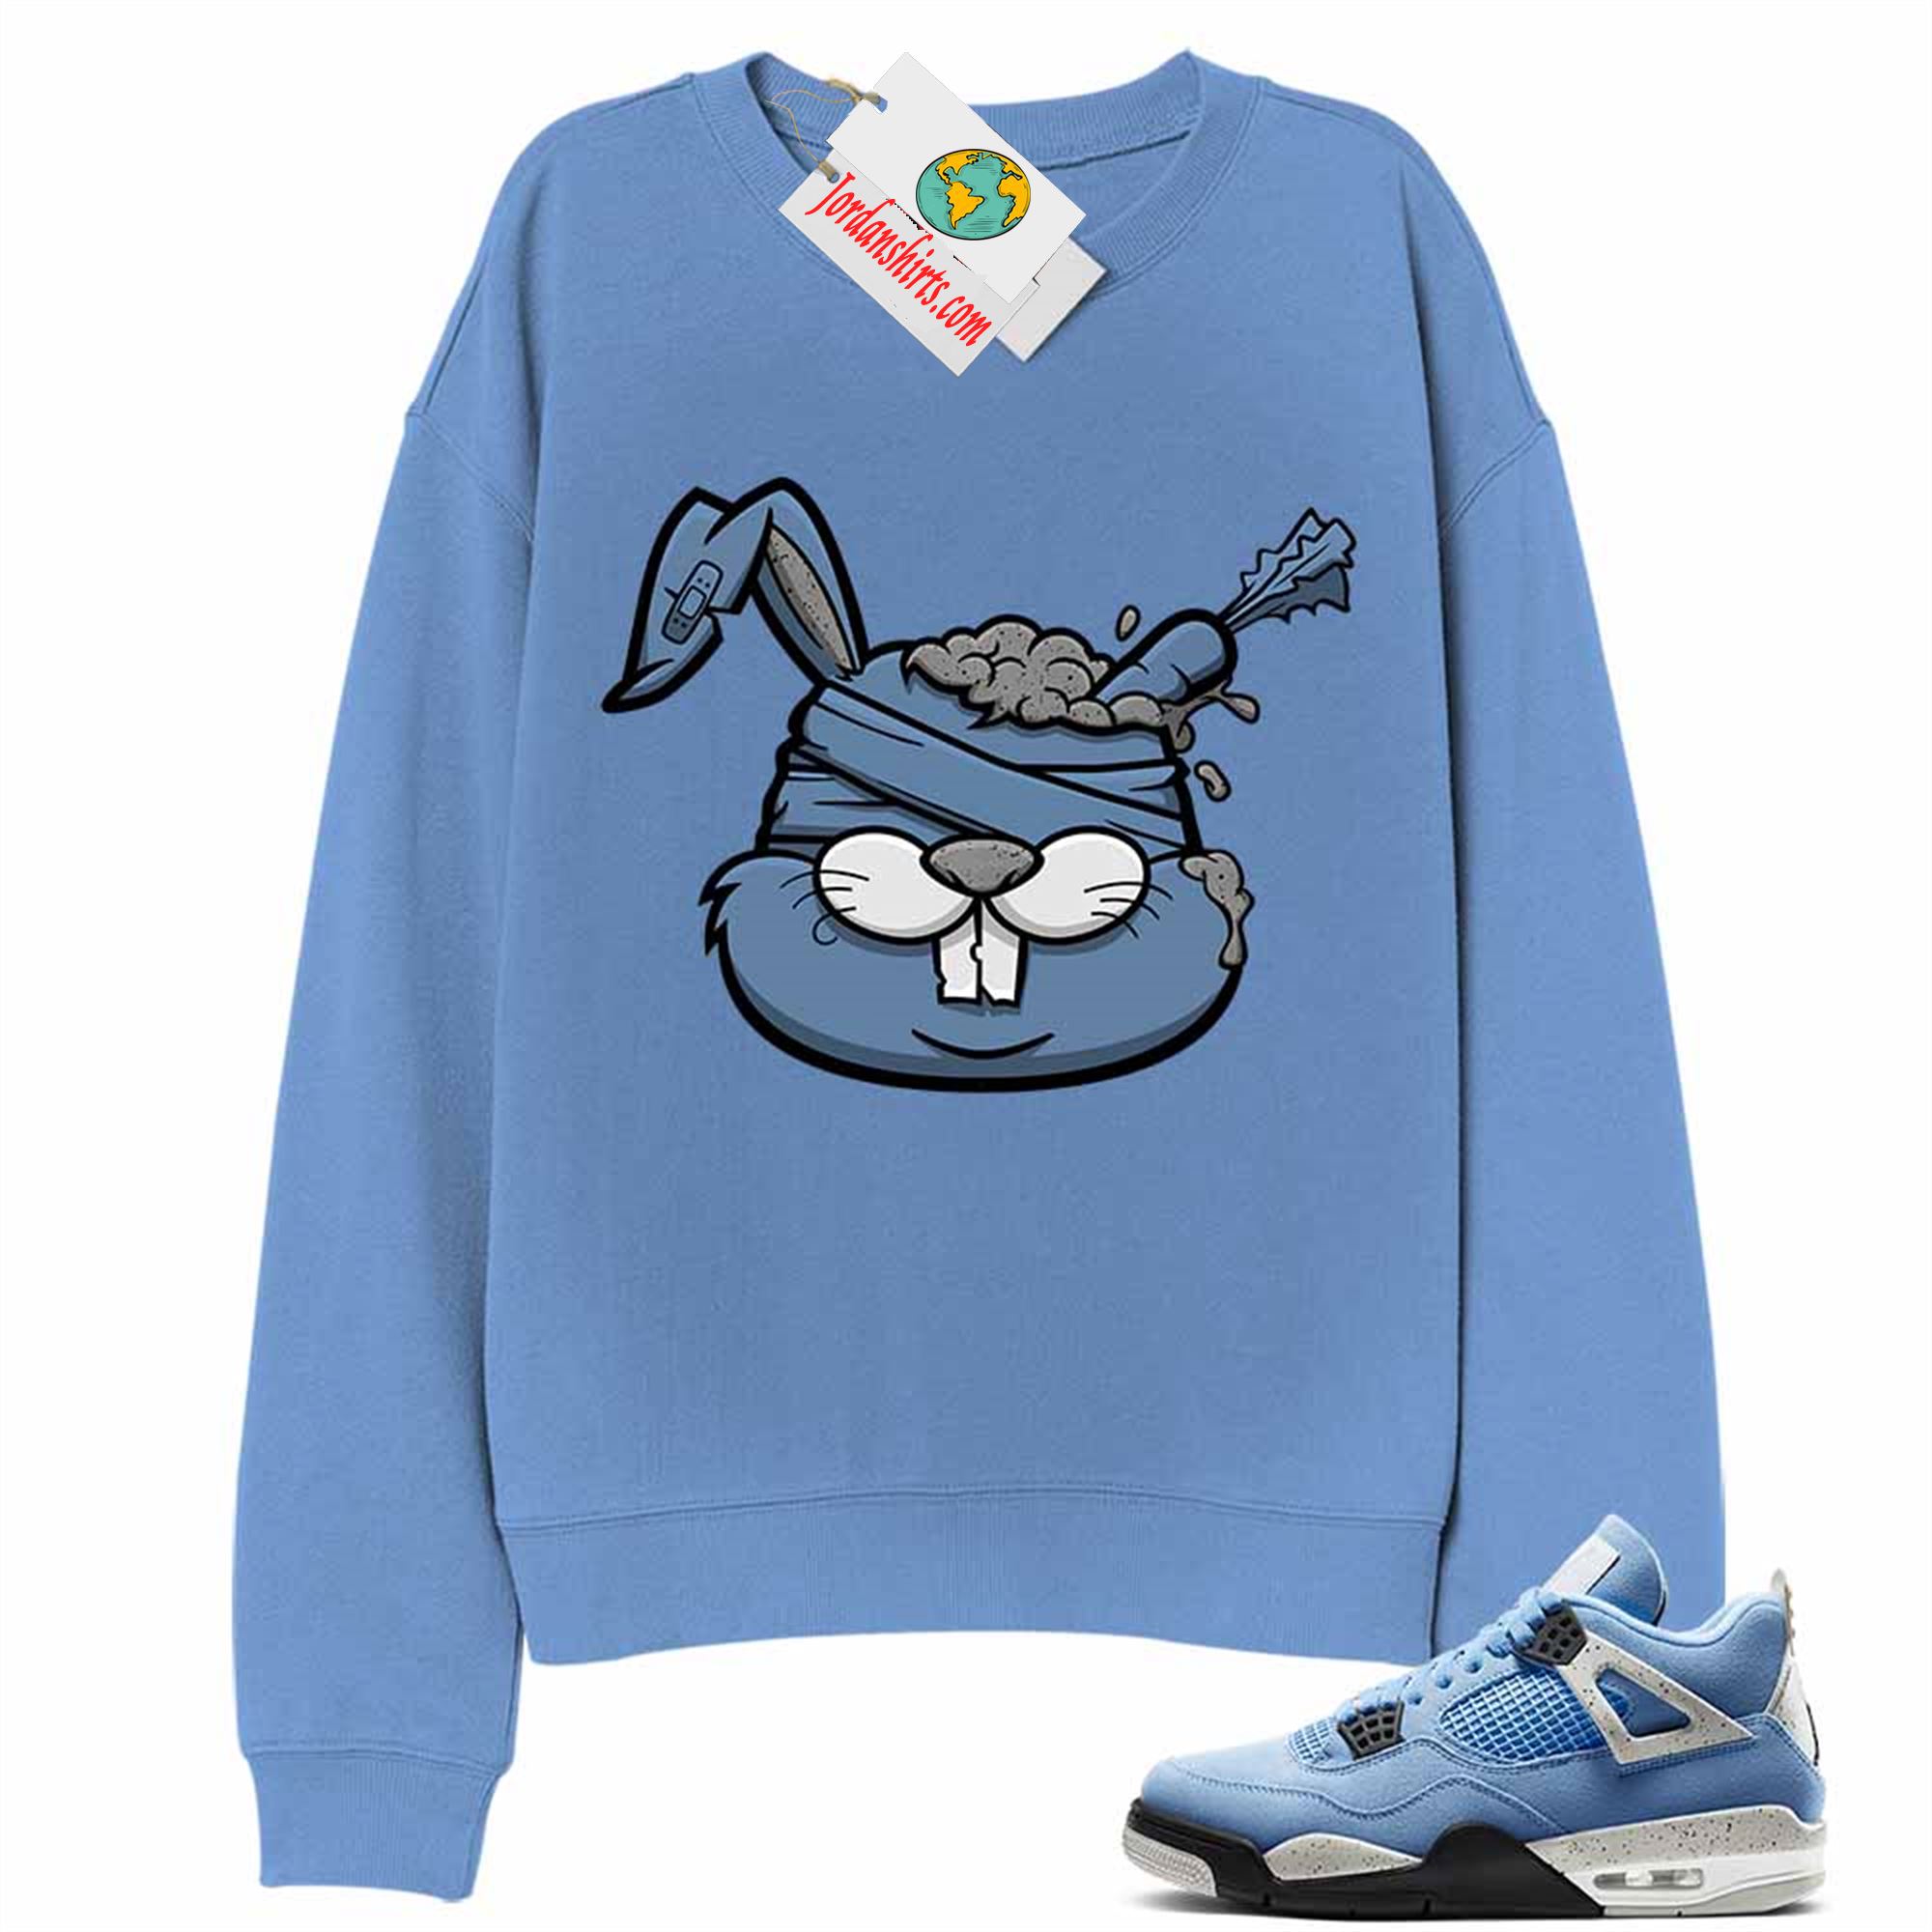 Jordan 4 Sweatshirt, Zombie Bunny Blue Hoodie Air Jordan 4 University Blue 4s Full Size Up To 5xl